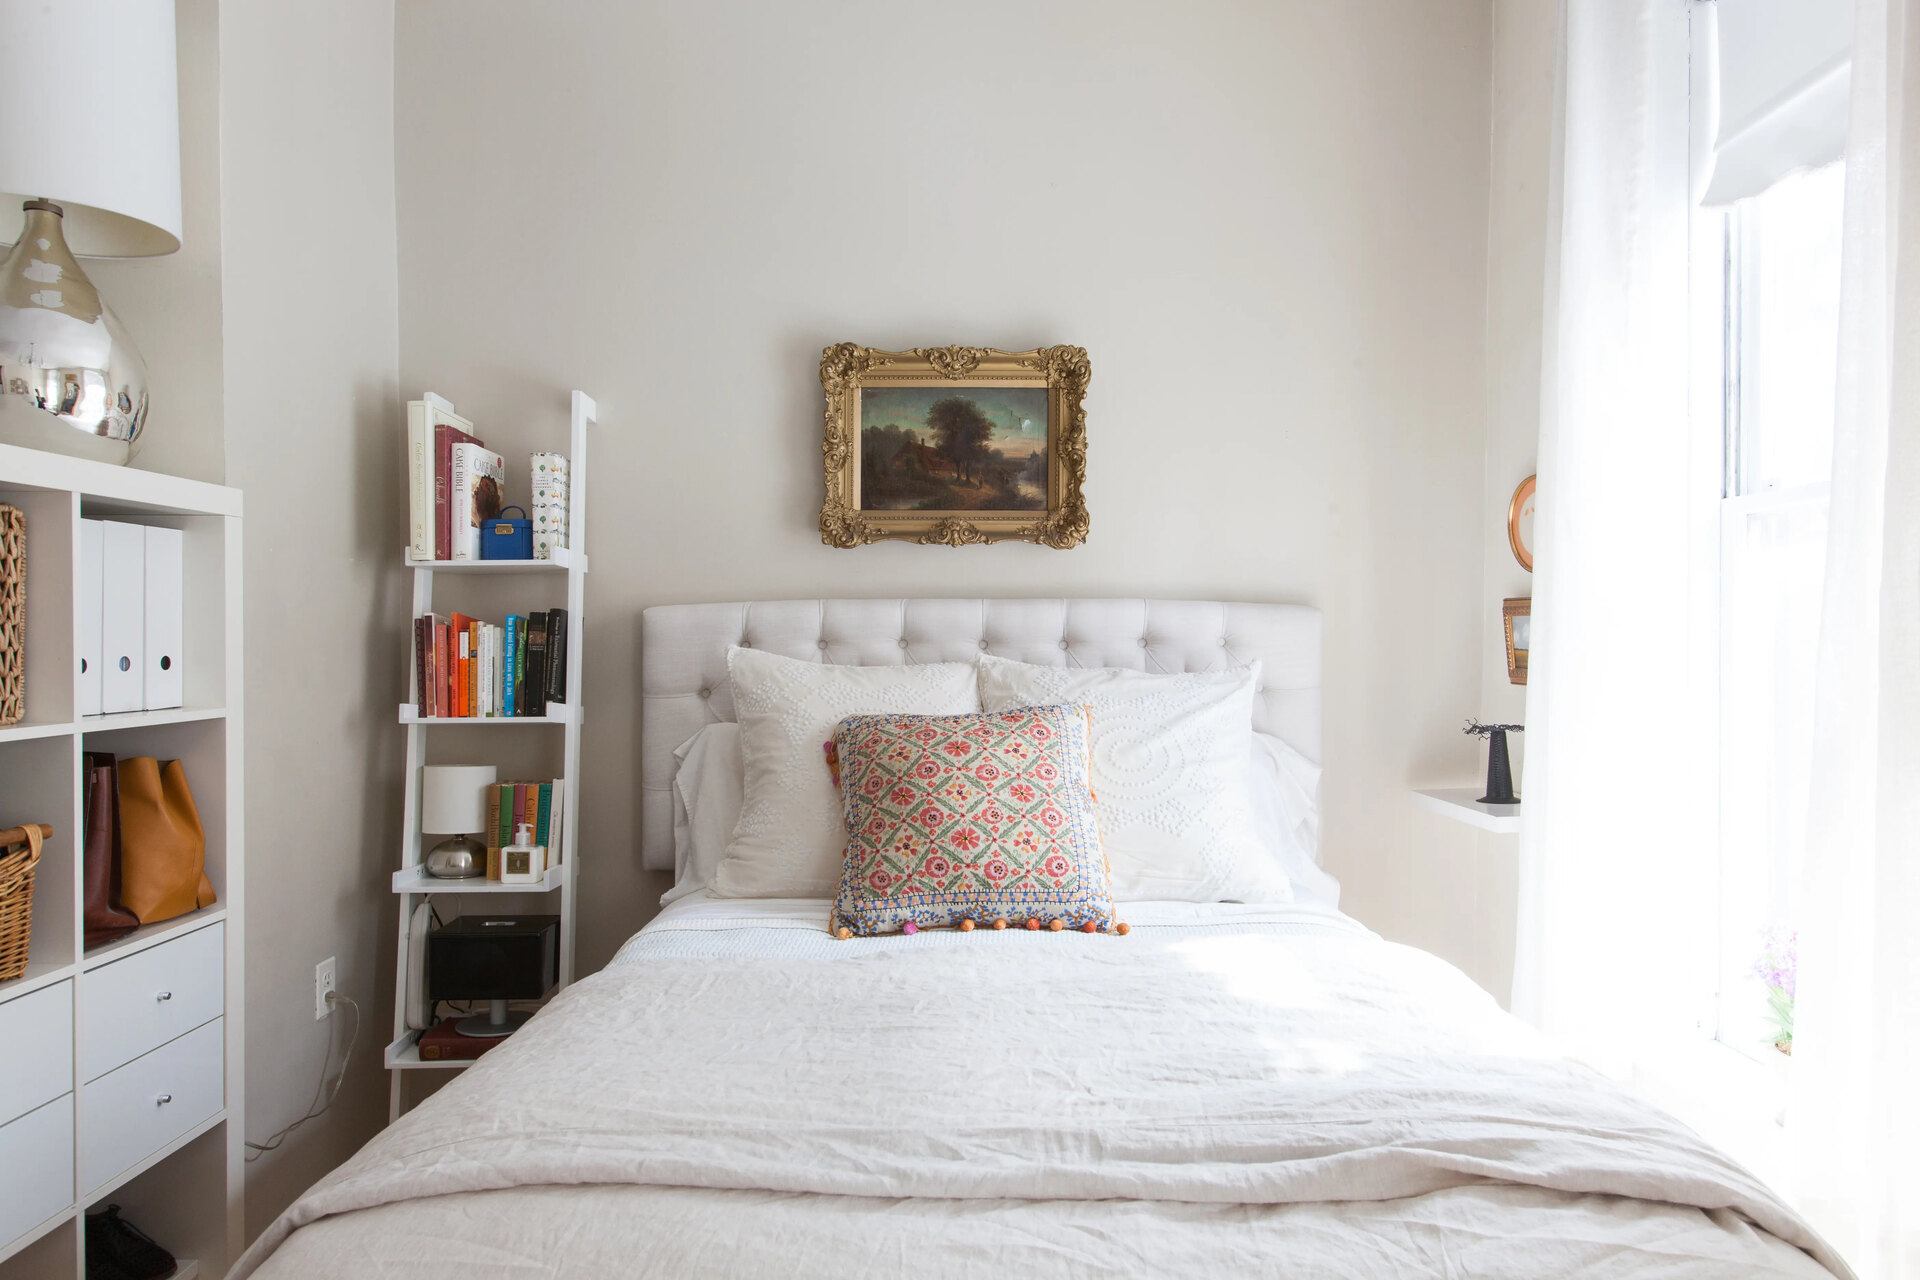 Small Bedroom Organization Tips From A Studio Dweller